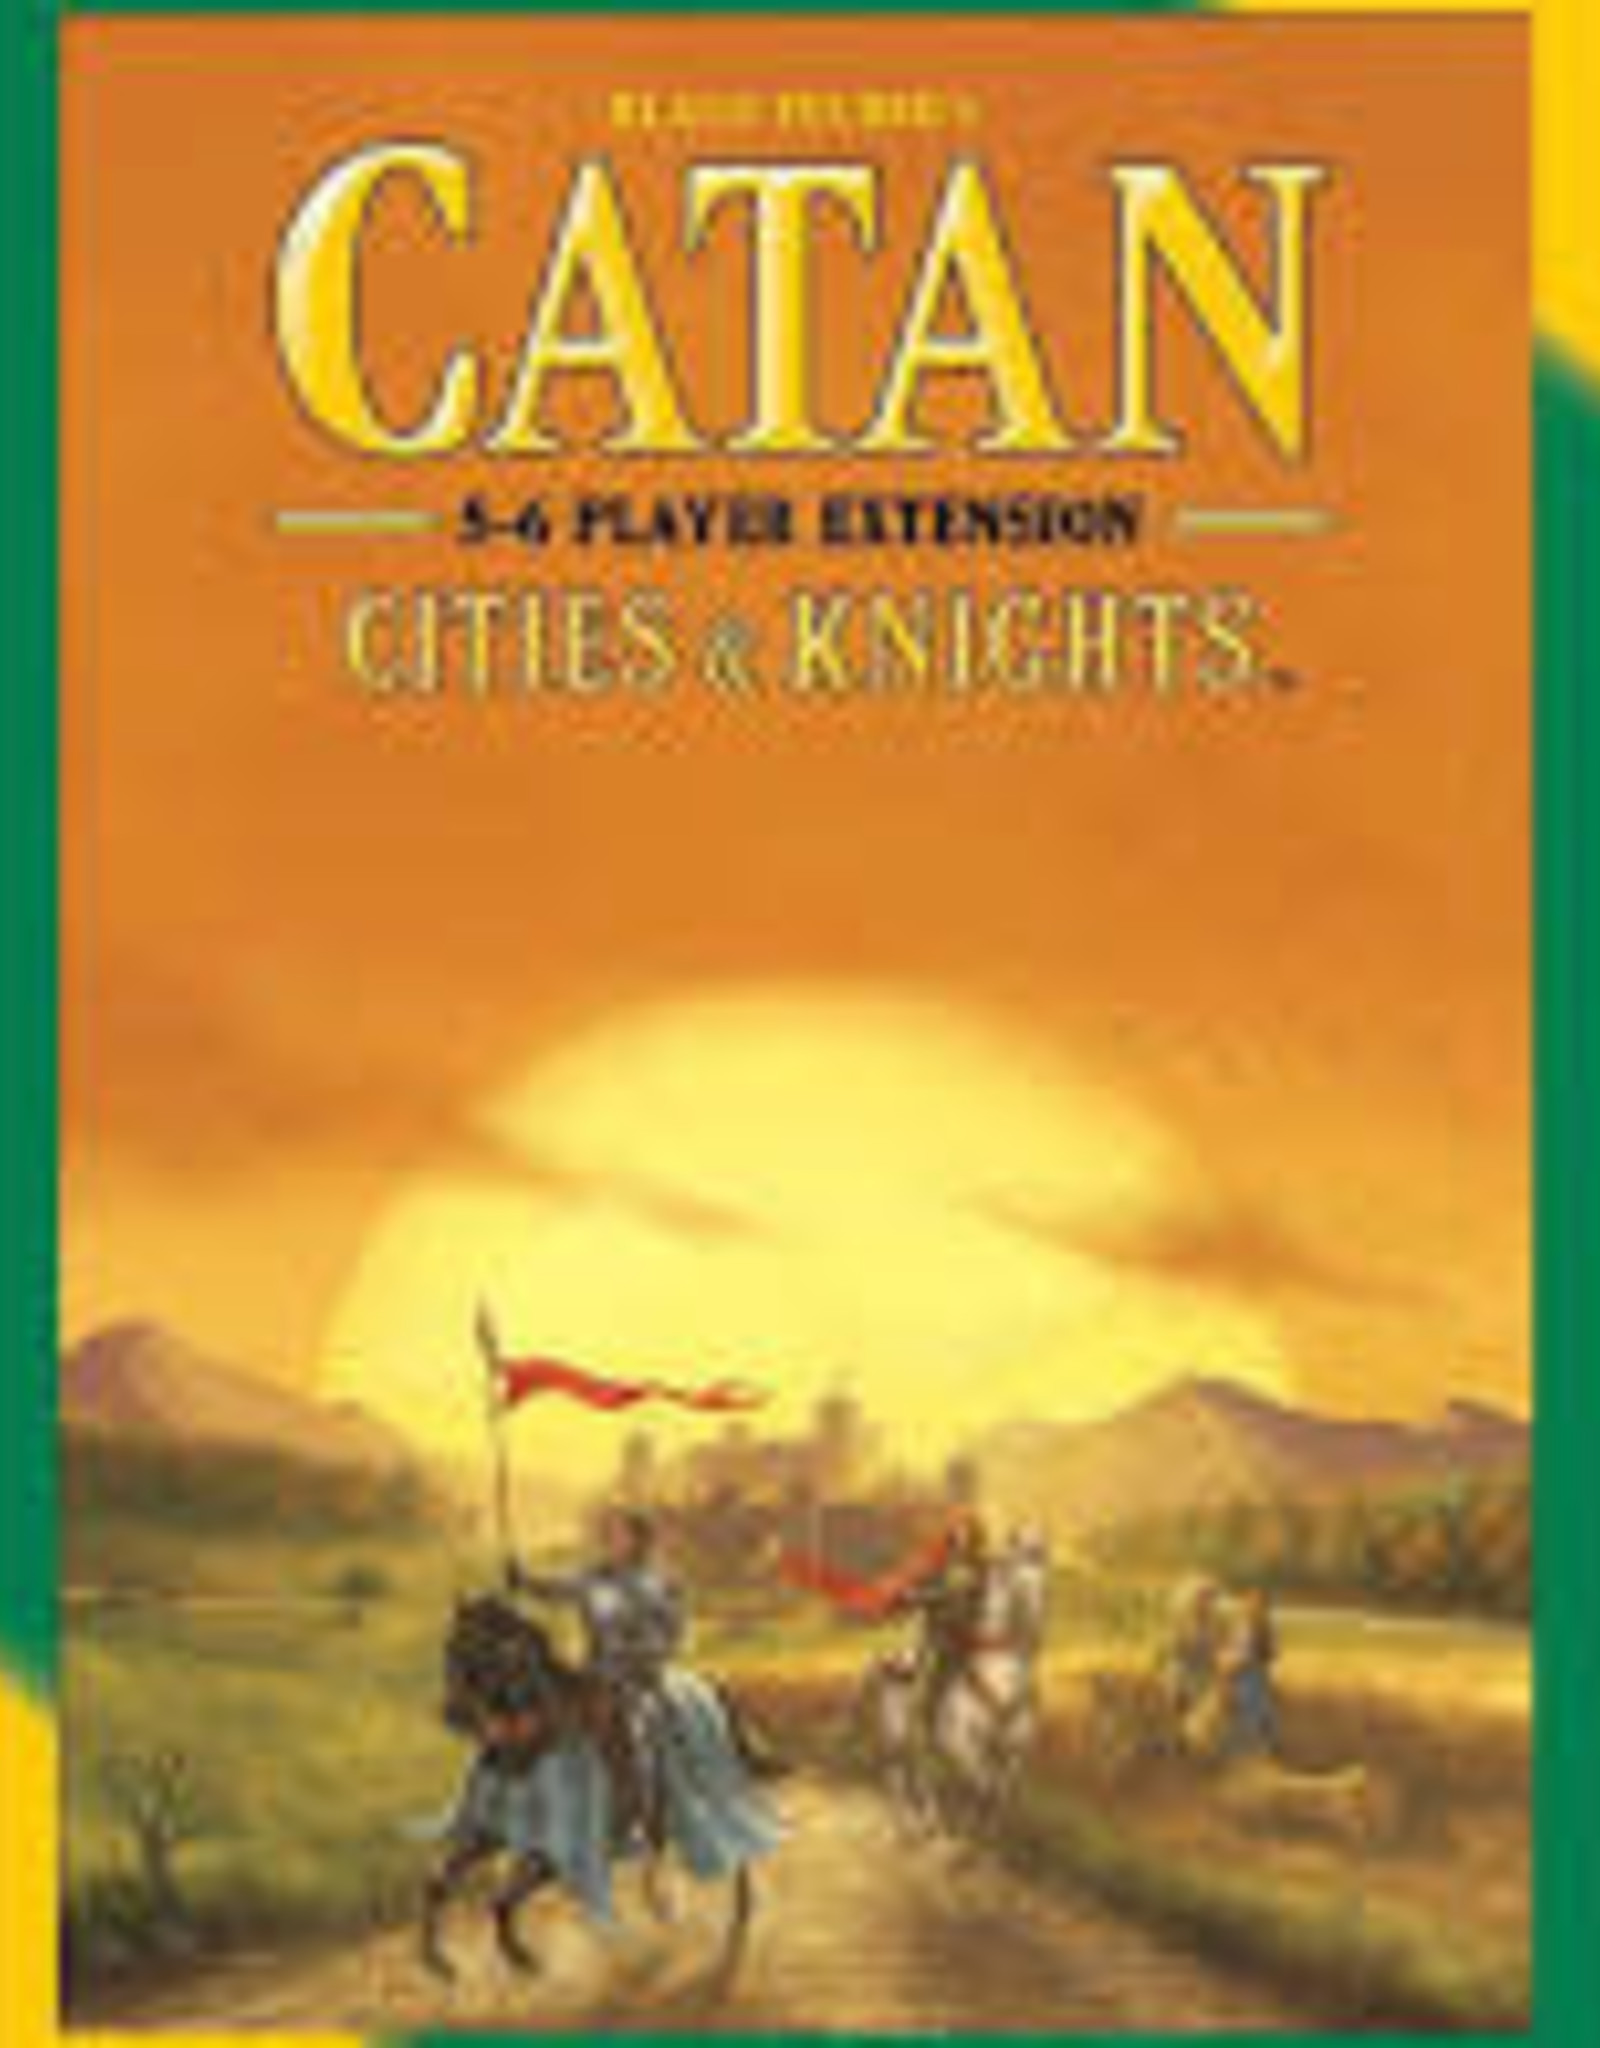 Catan Studio Catan (Cities & Knights 5-6 Player Extension)